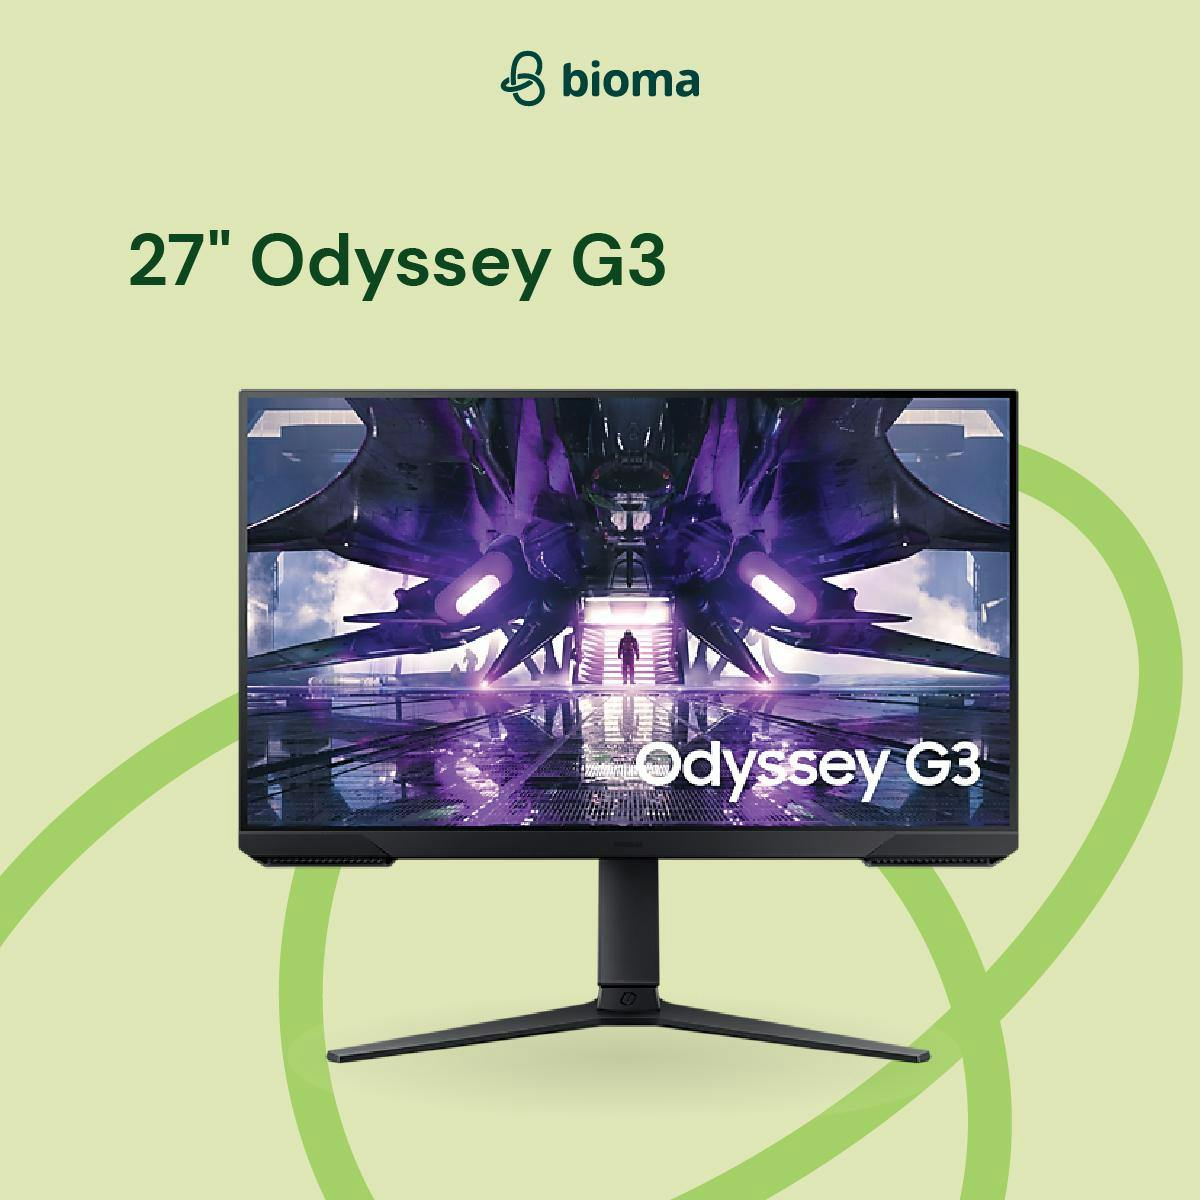 27" Odyssey G3